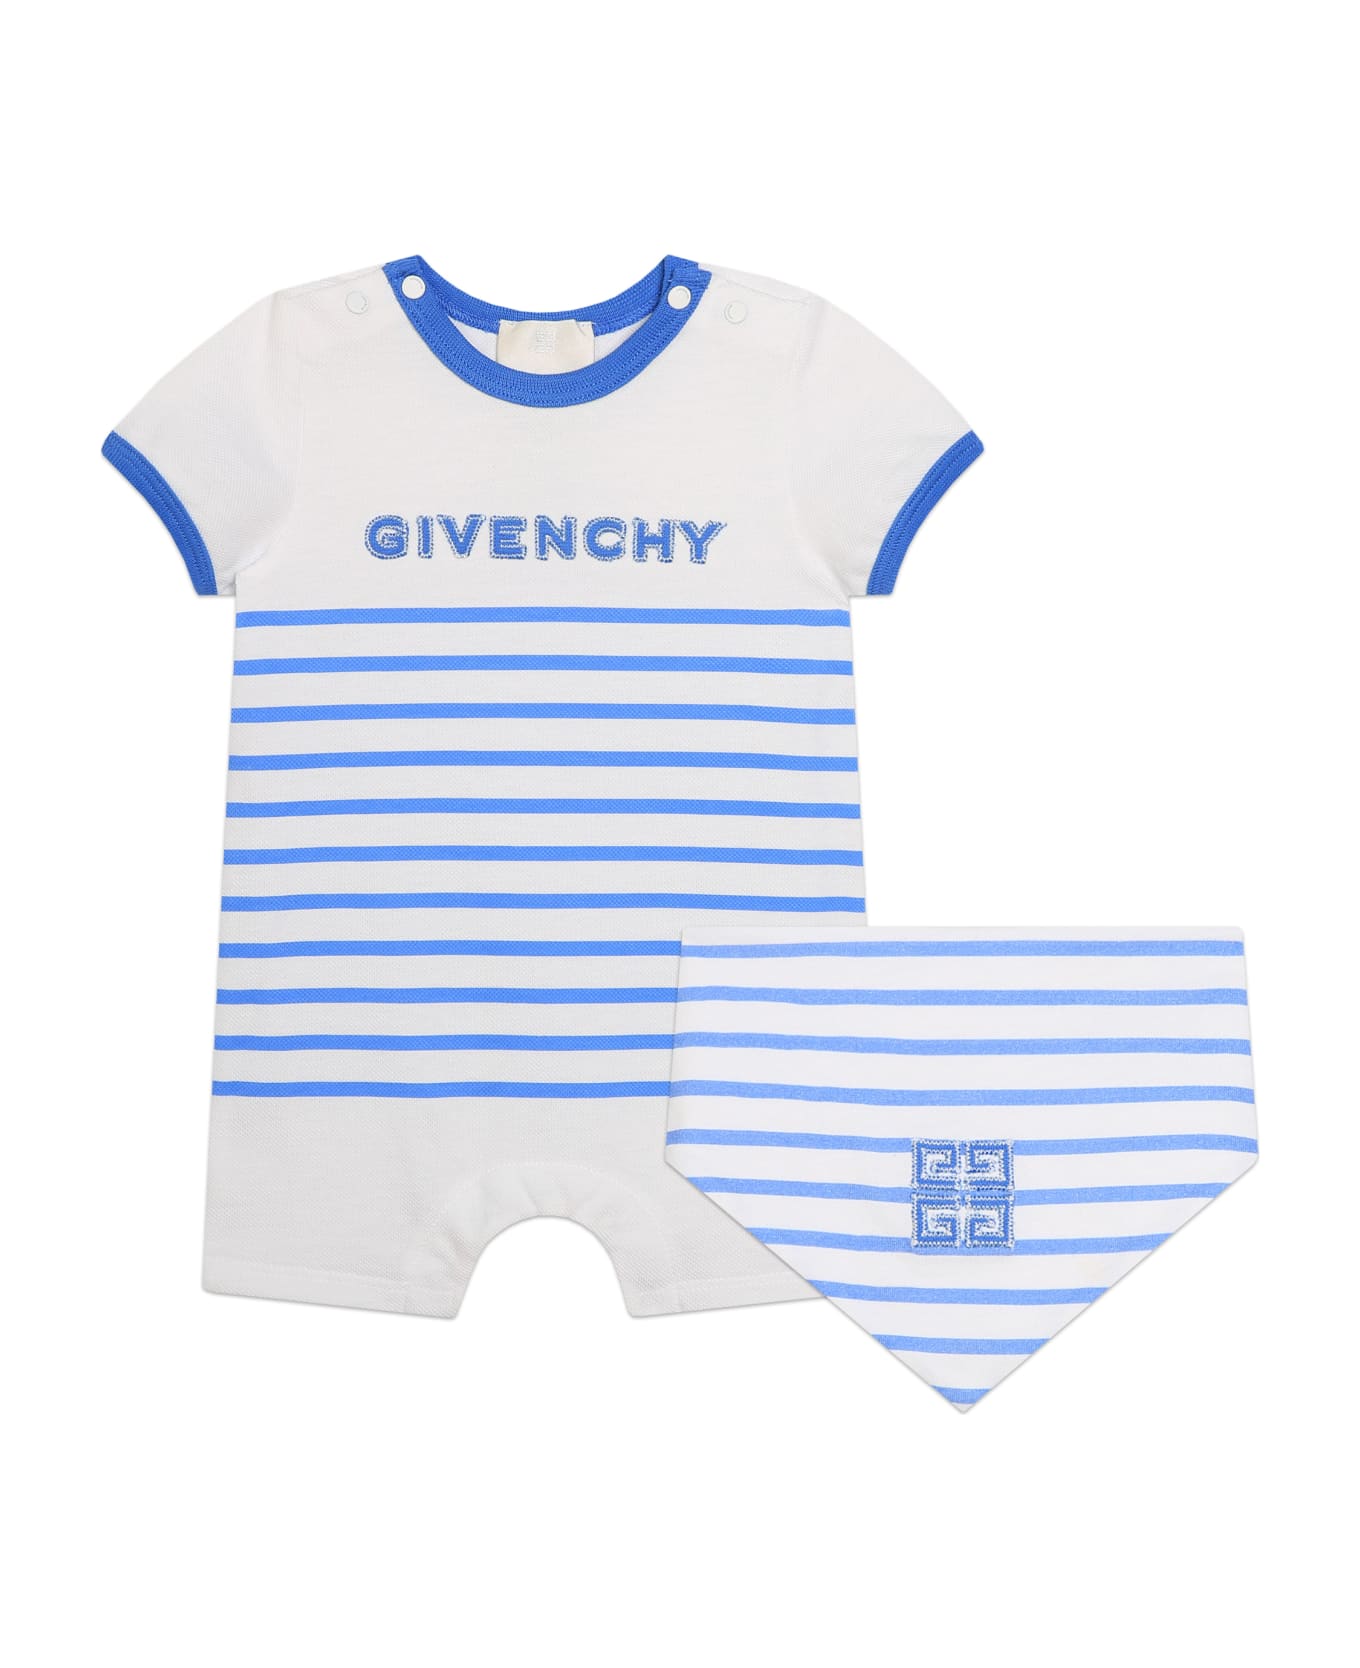 Givenchy 2 Piece Set With Pajamas - Blue